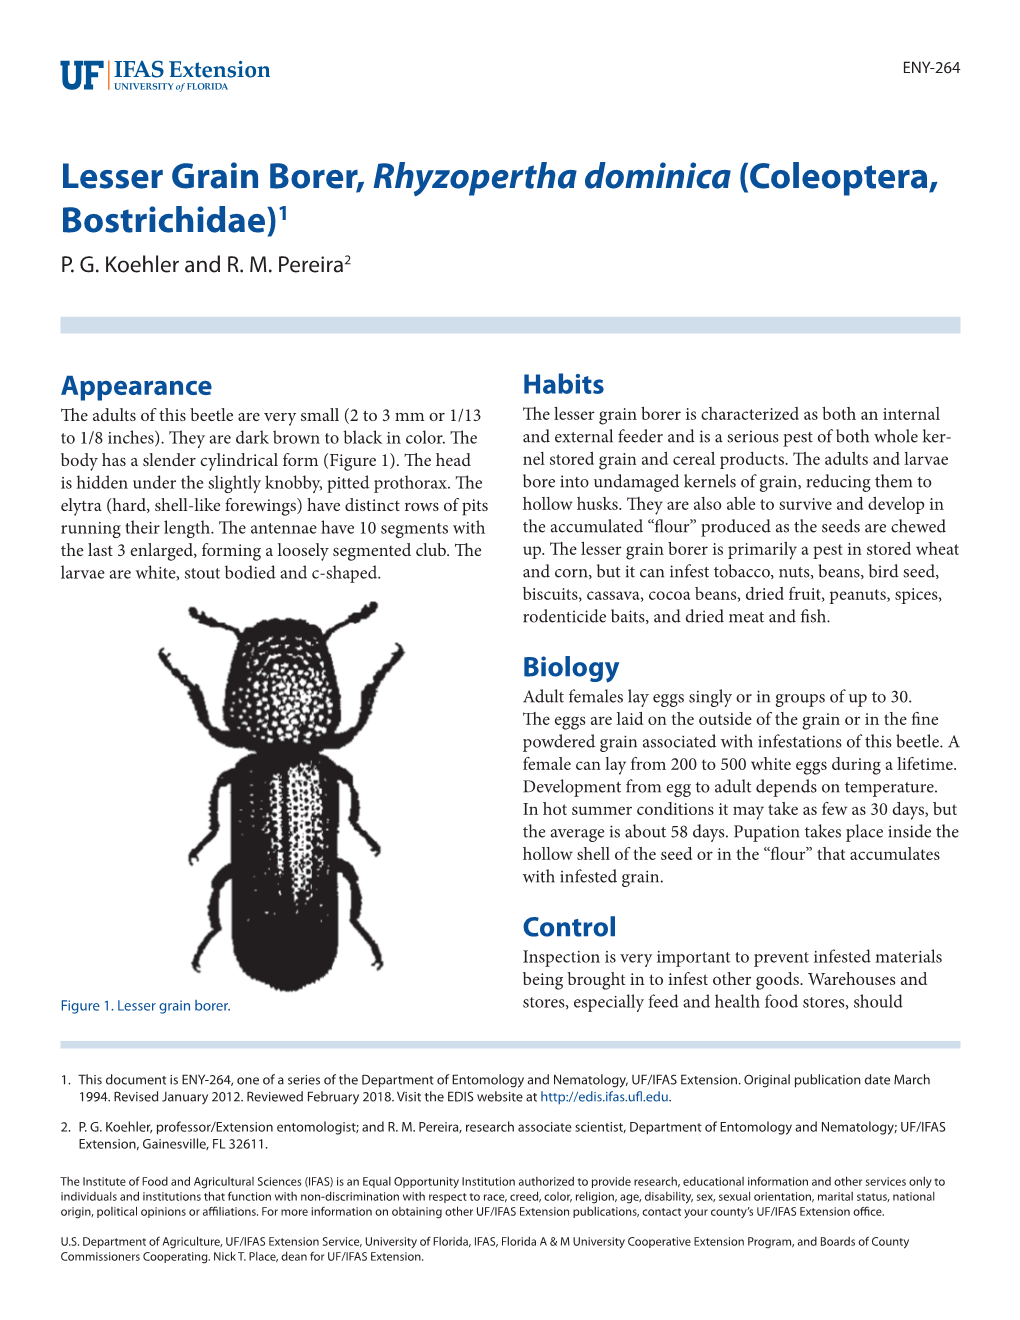 Lesser Grain Borer, Rhyzopertha Dominica (Coleoptera, Bostrichidae)1 P